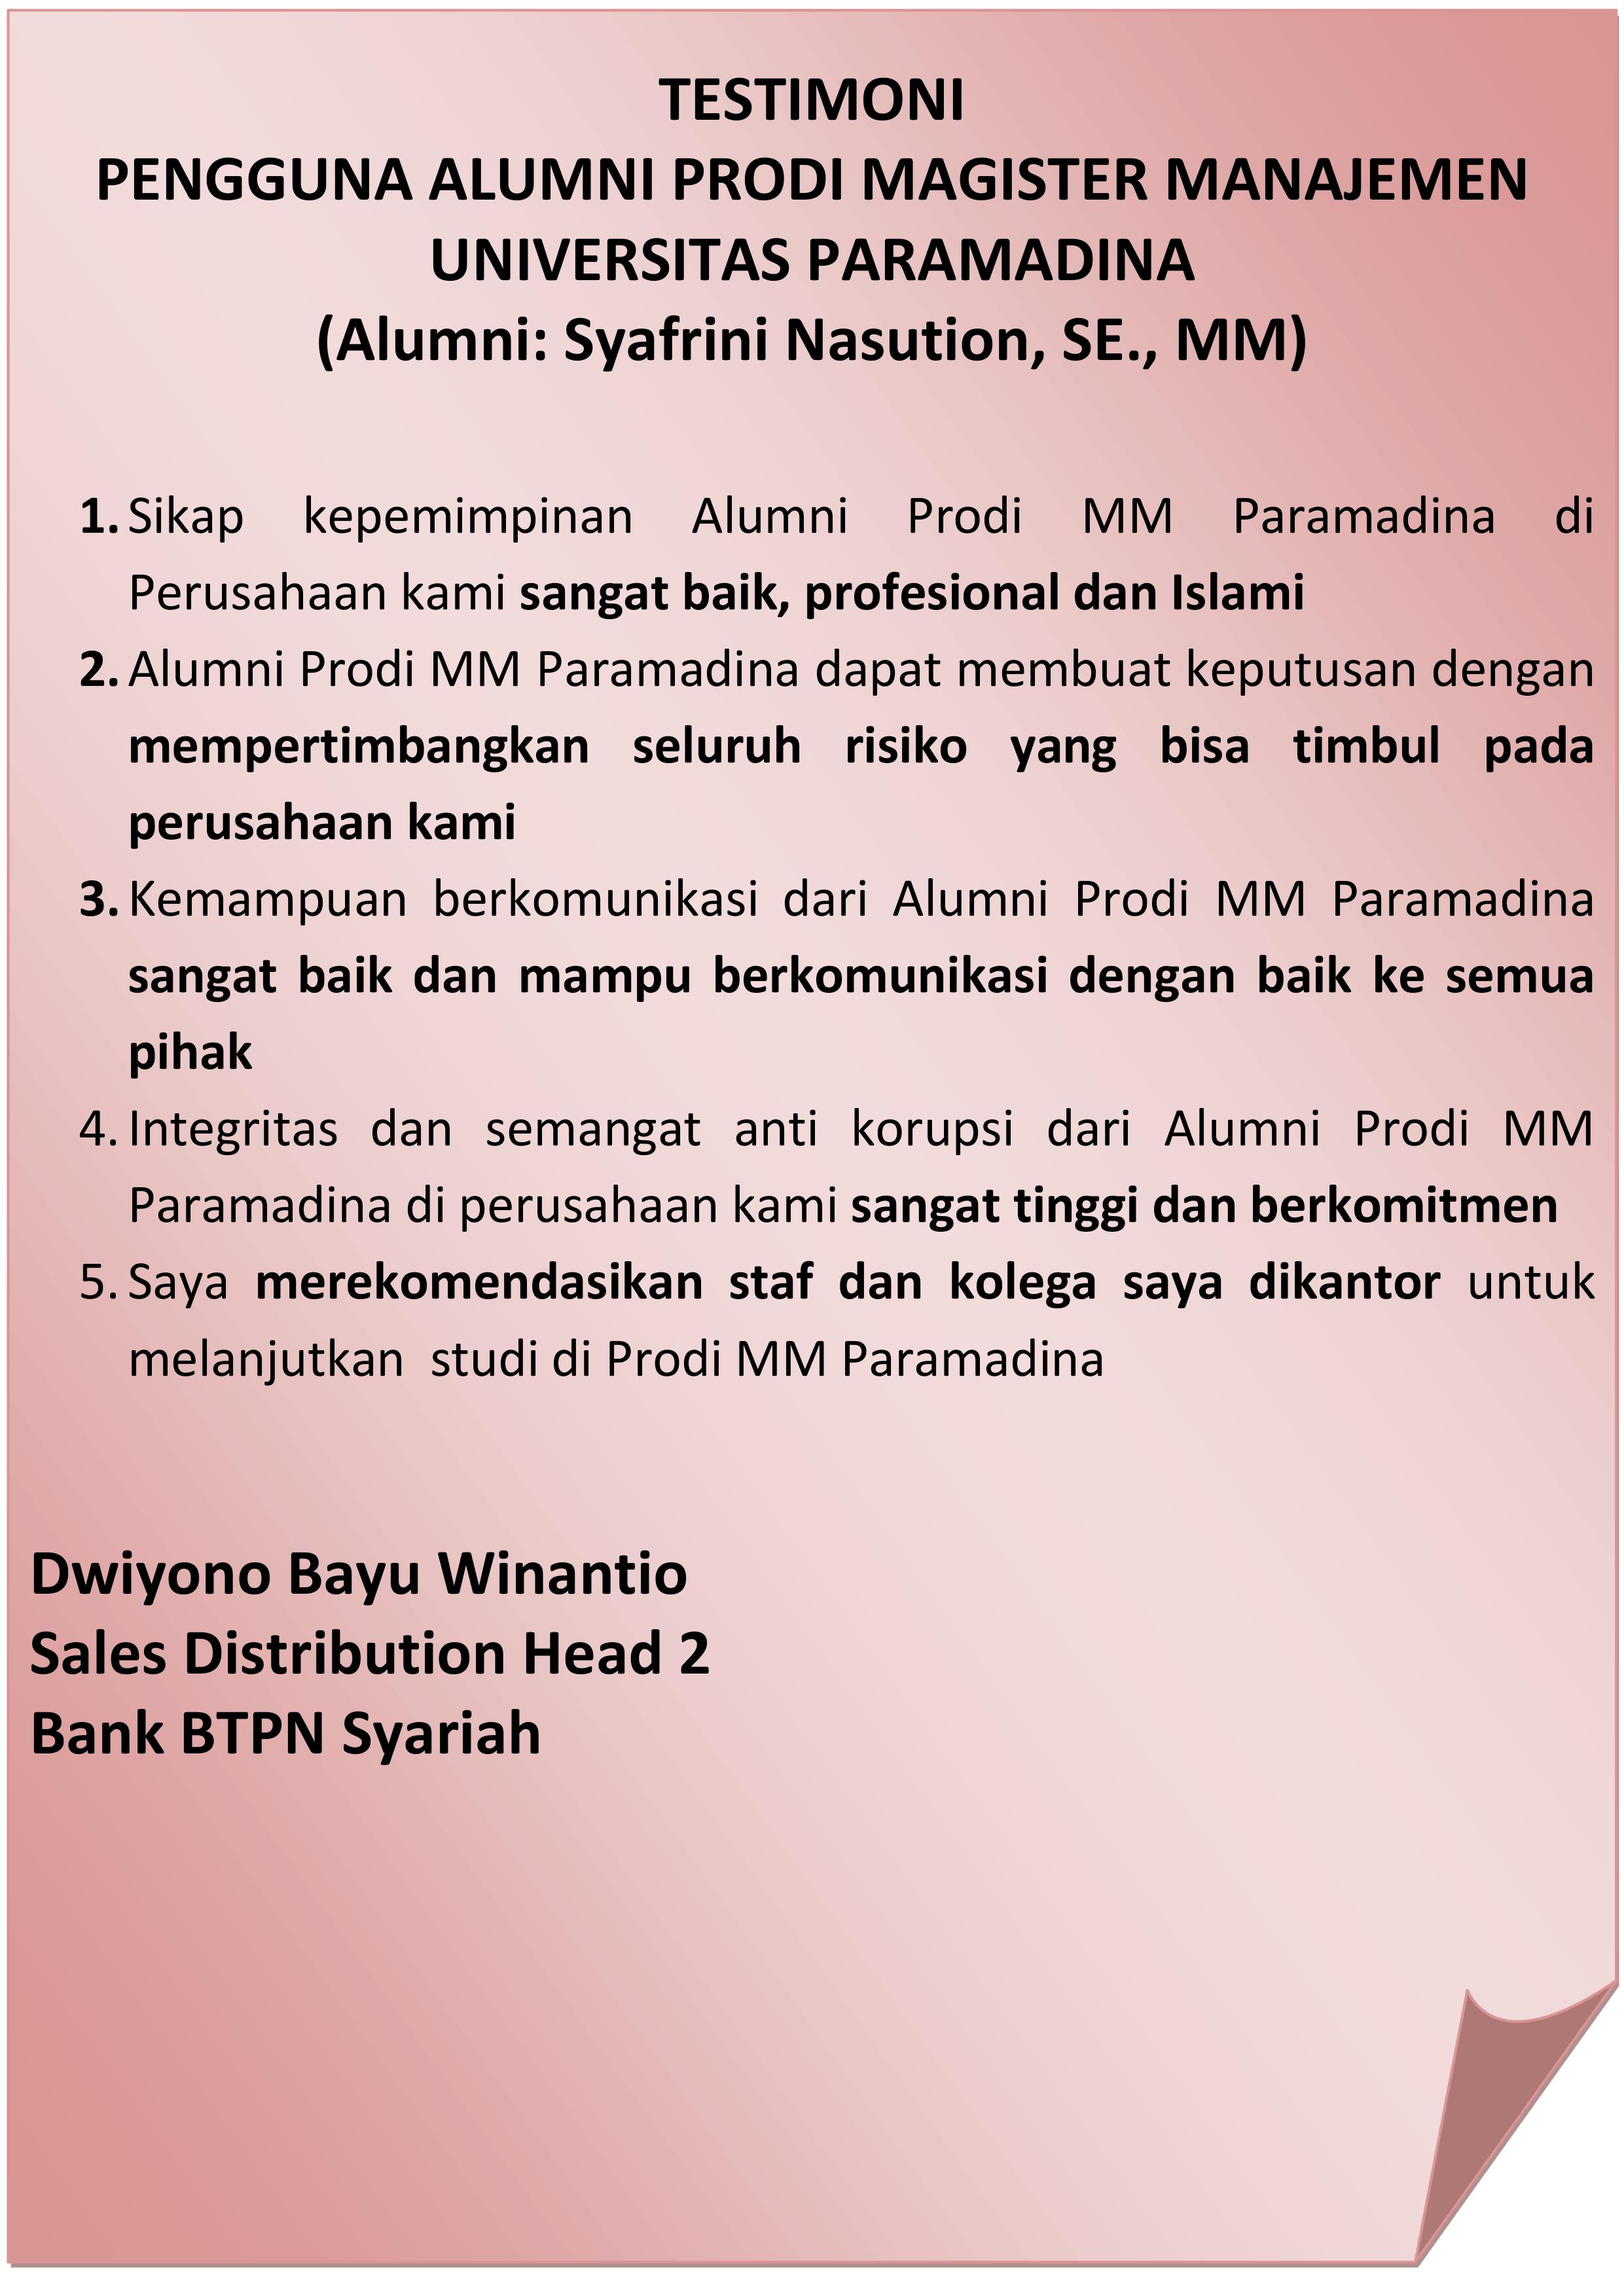 Testimoni Pengguna Alumni Prodi MM Bank BTPN Syariah